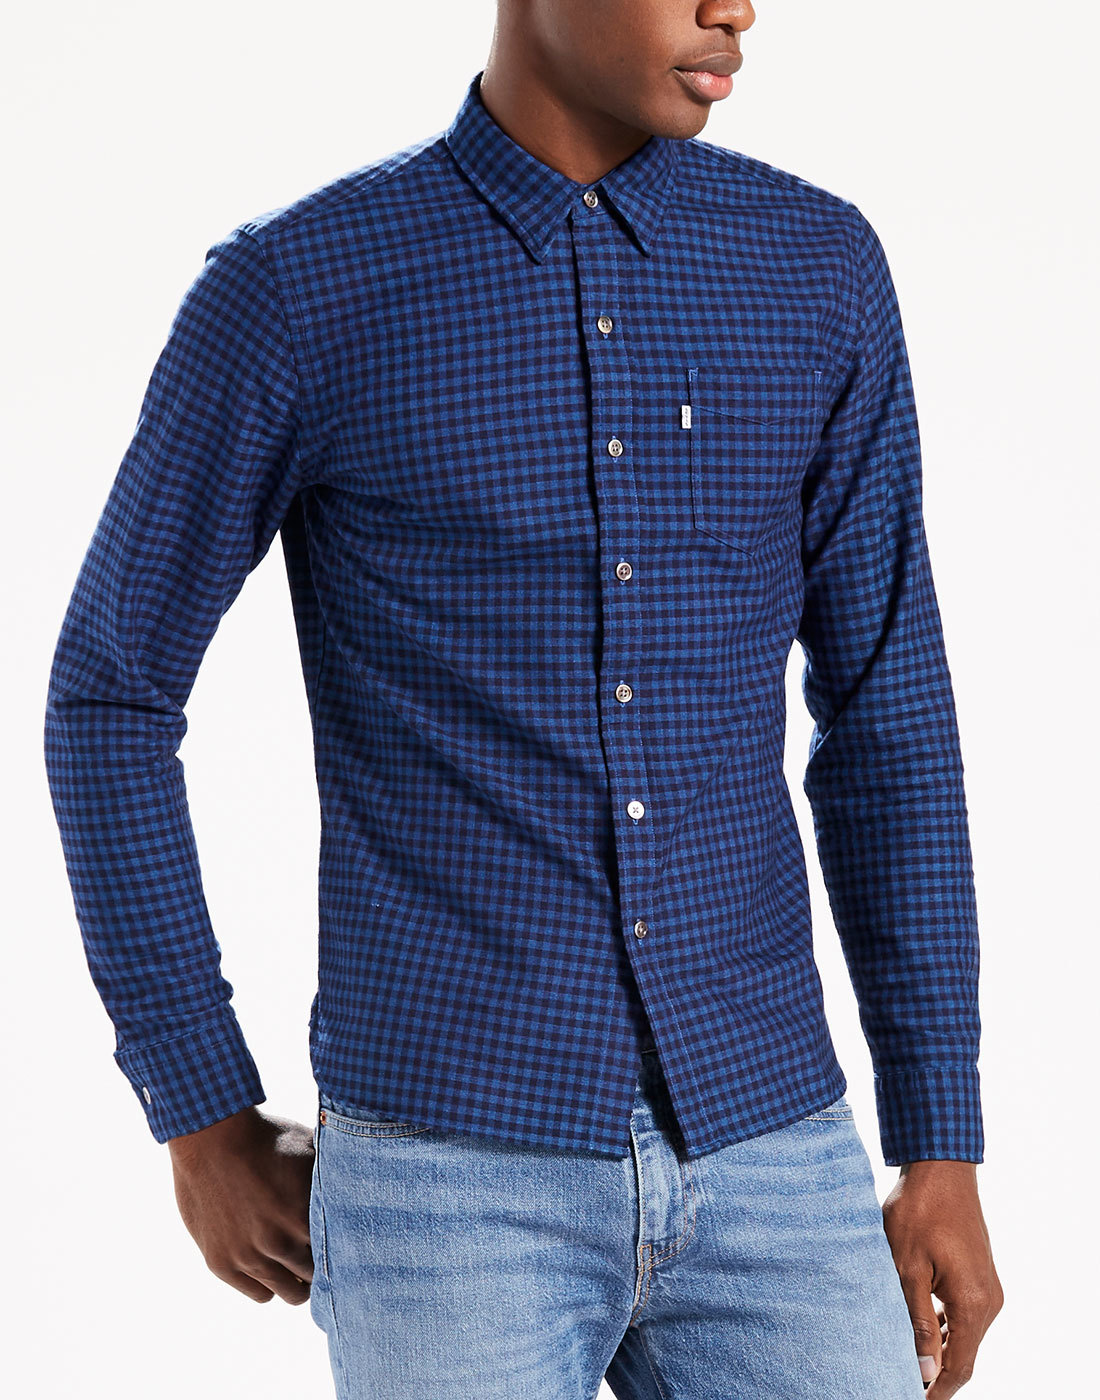 LEVI'S® Retro Mod Sunset 1 Pocket Check Shirt BLUE